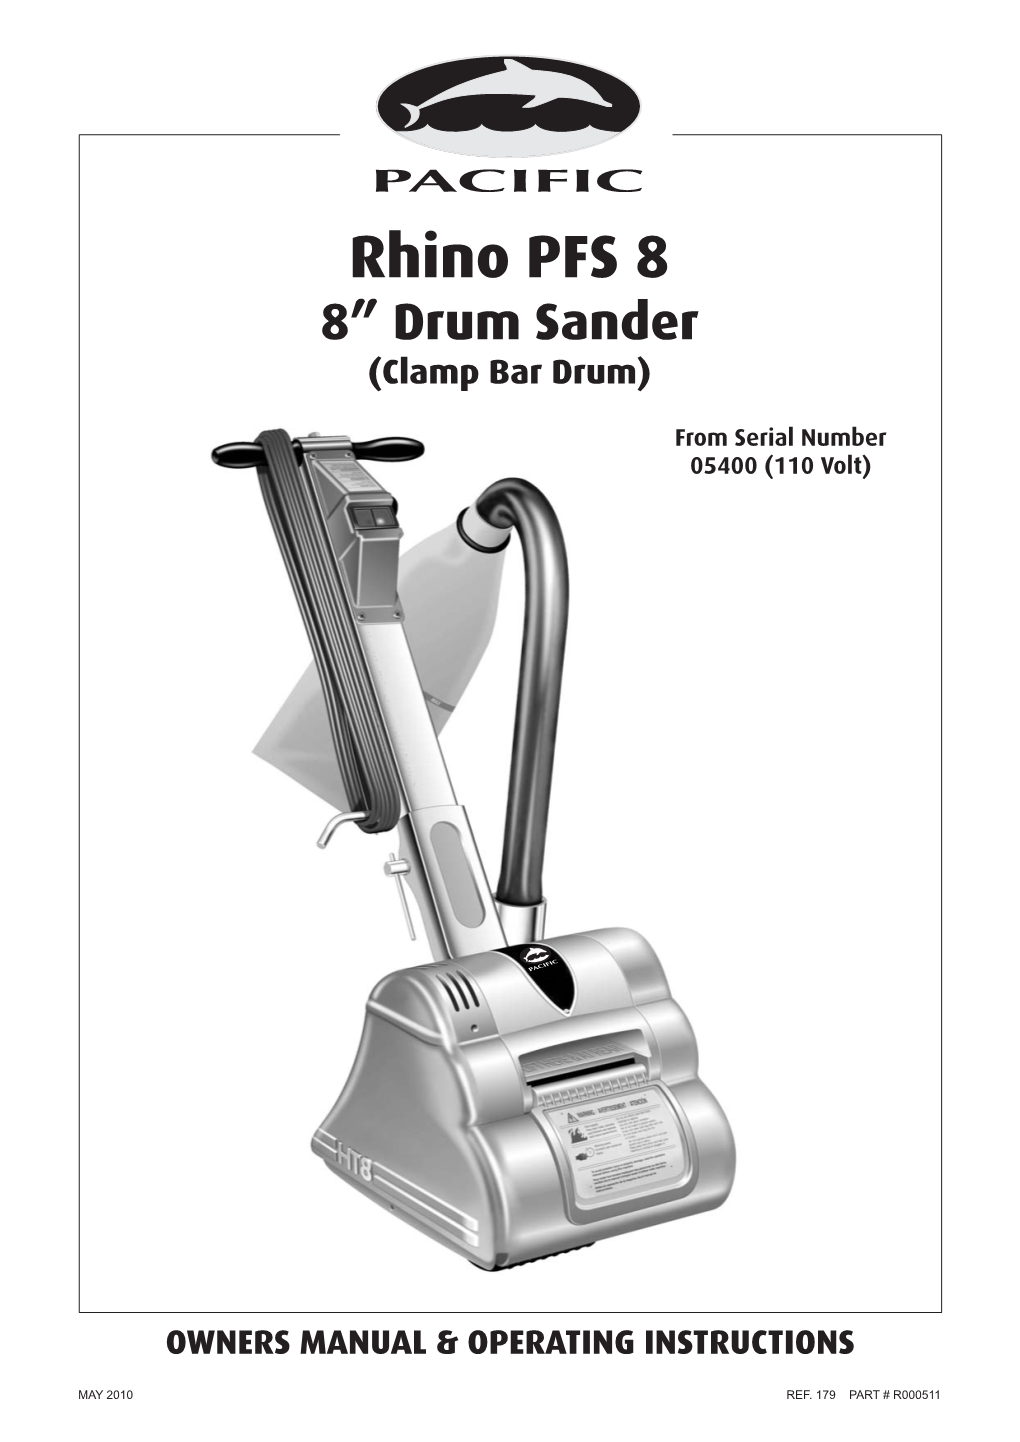 Rhino PFS 8 8” Drum Sander (Clamp Bar Drum)